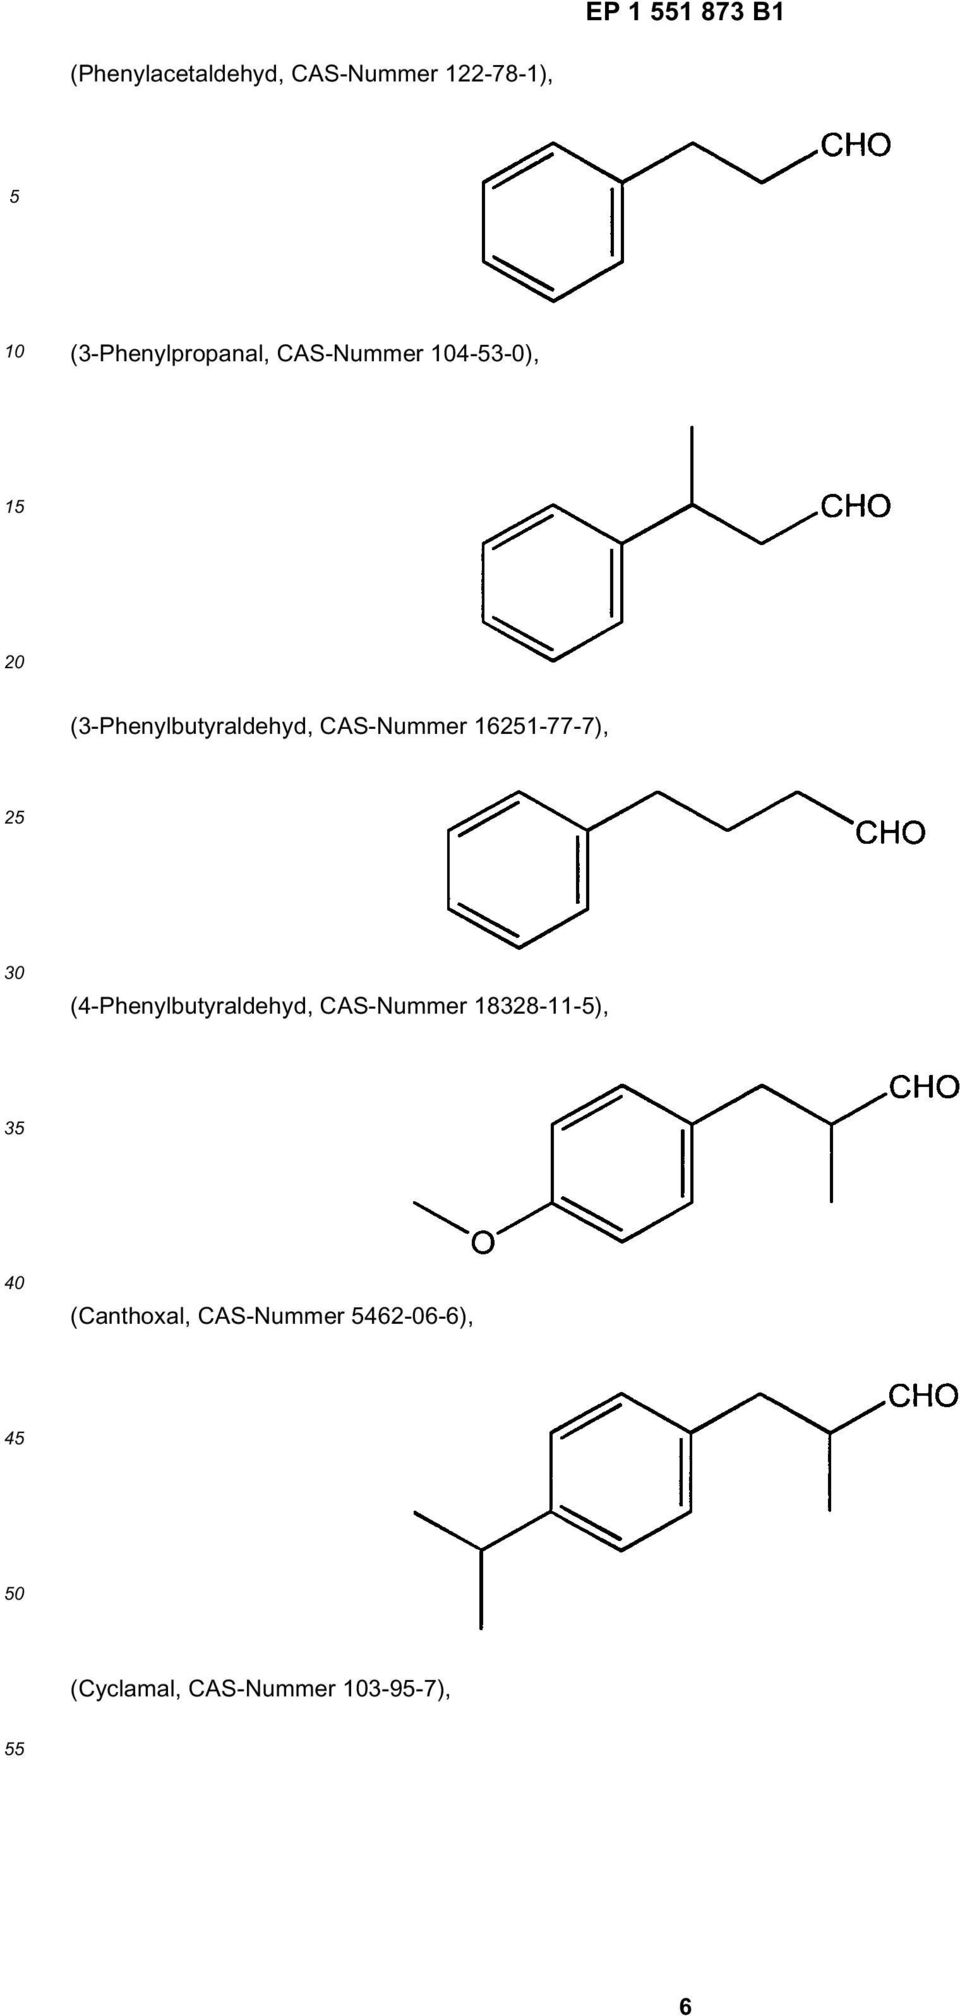 (3-Phenylbutyraldehyd, CAS-Nummer 161-77-7),